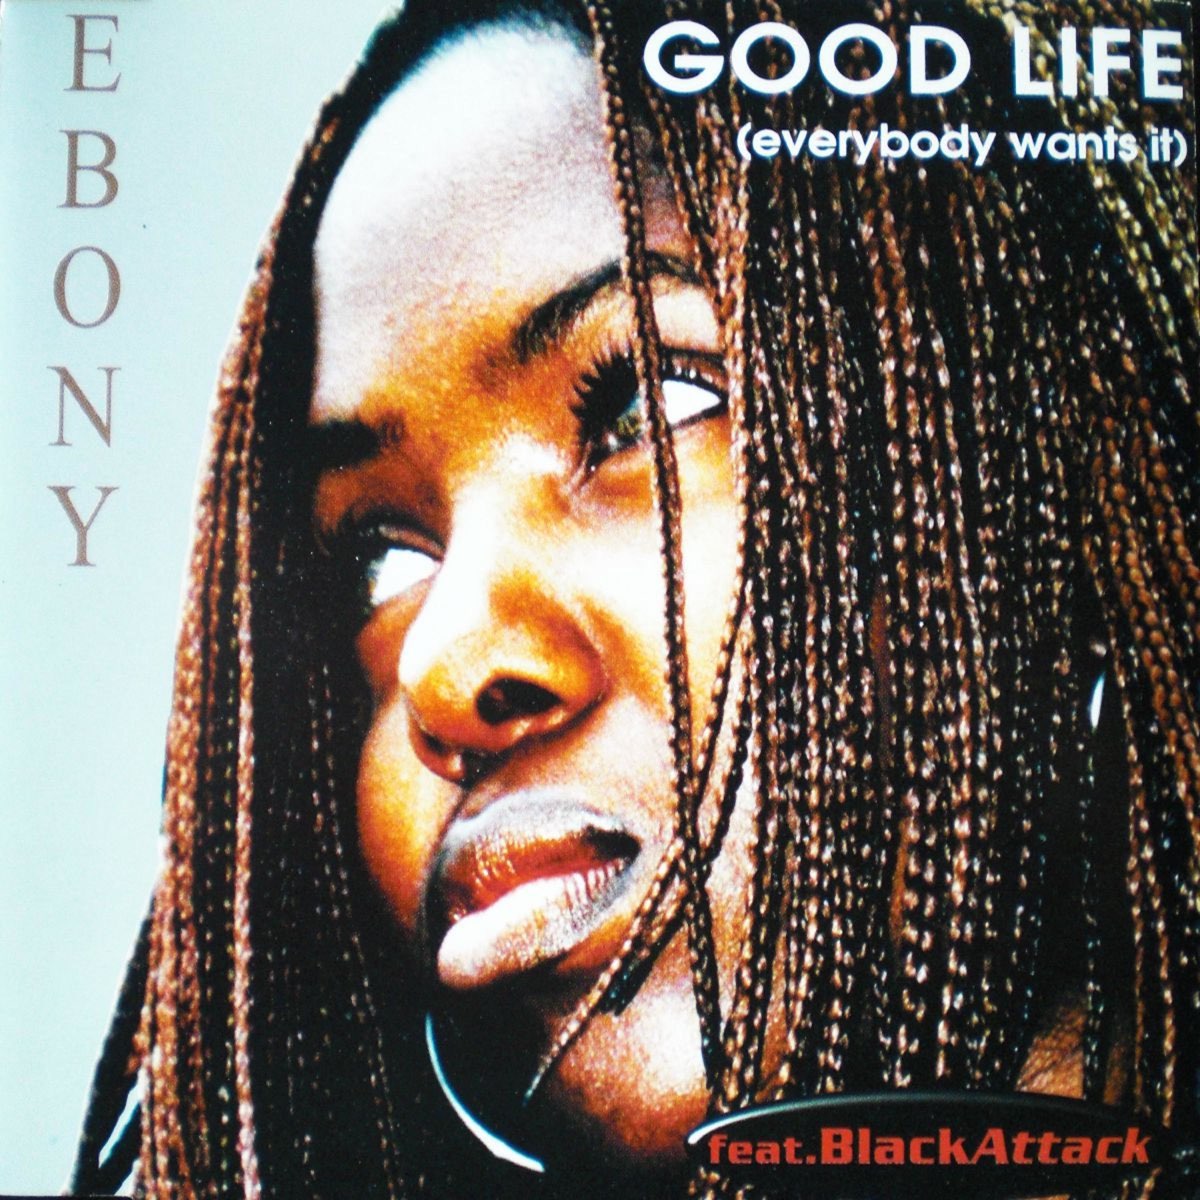 Best ebony. Блэк Аттак. Ebony good Life. Black Attack good Life обложка альбома. Black Attack what's going on.